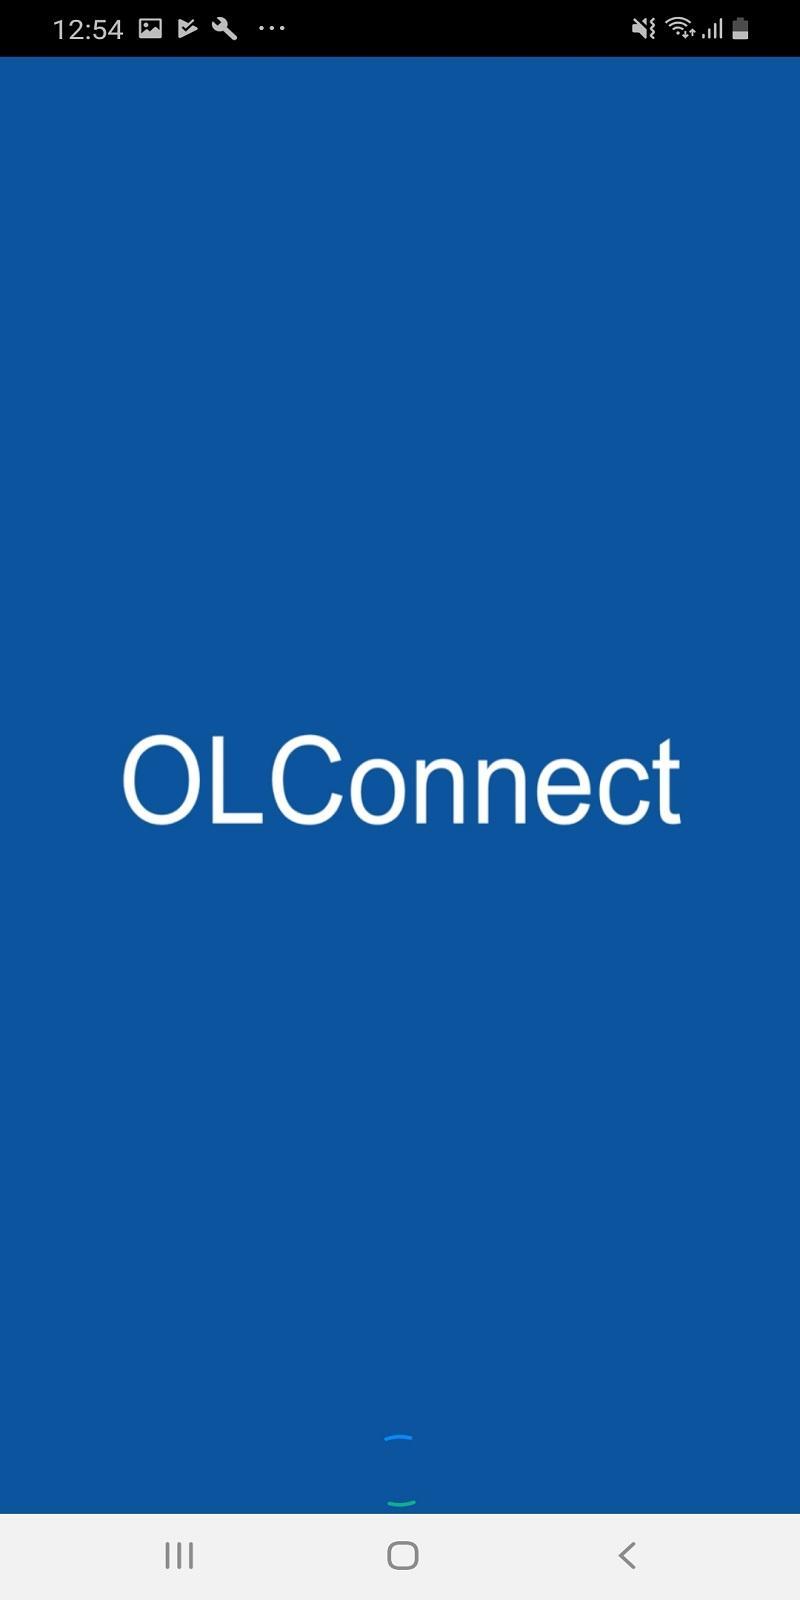 OLConnect 202100.8.22 Screenshot 1